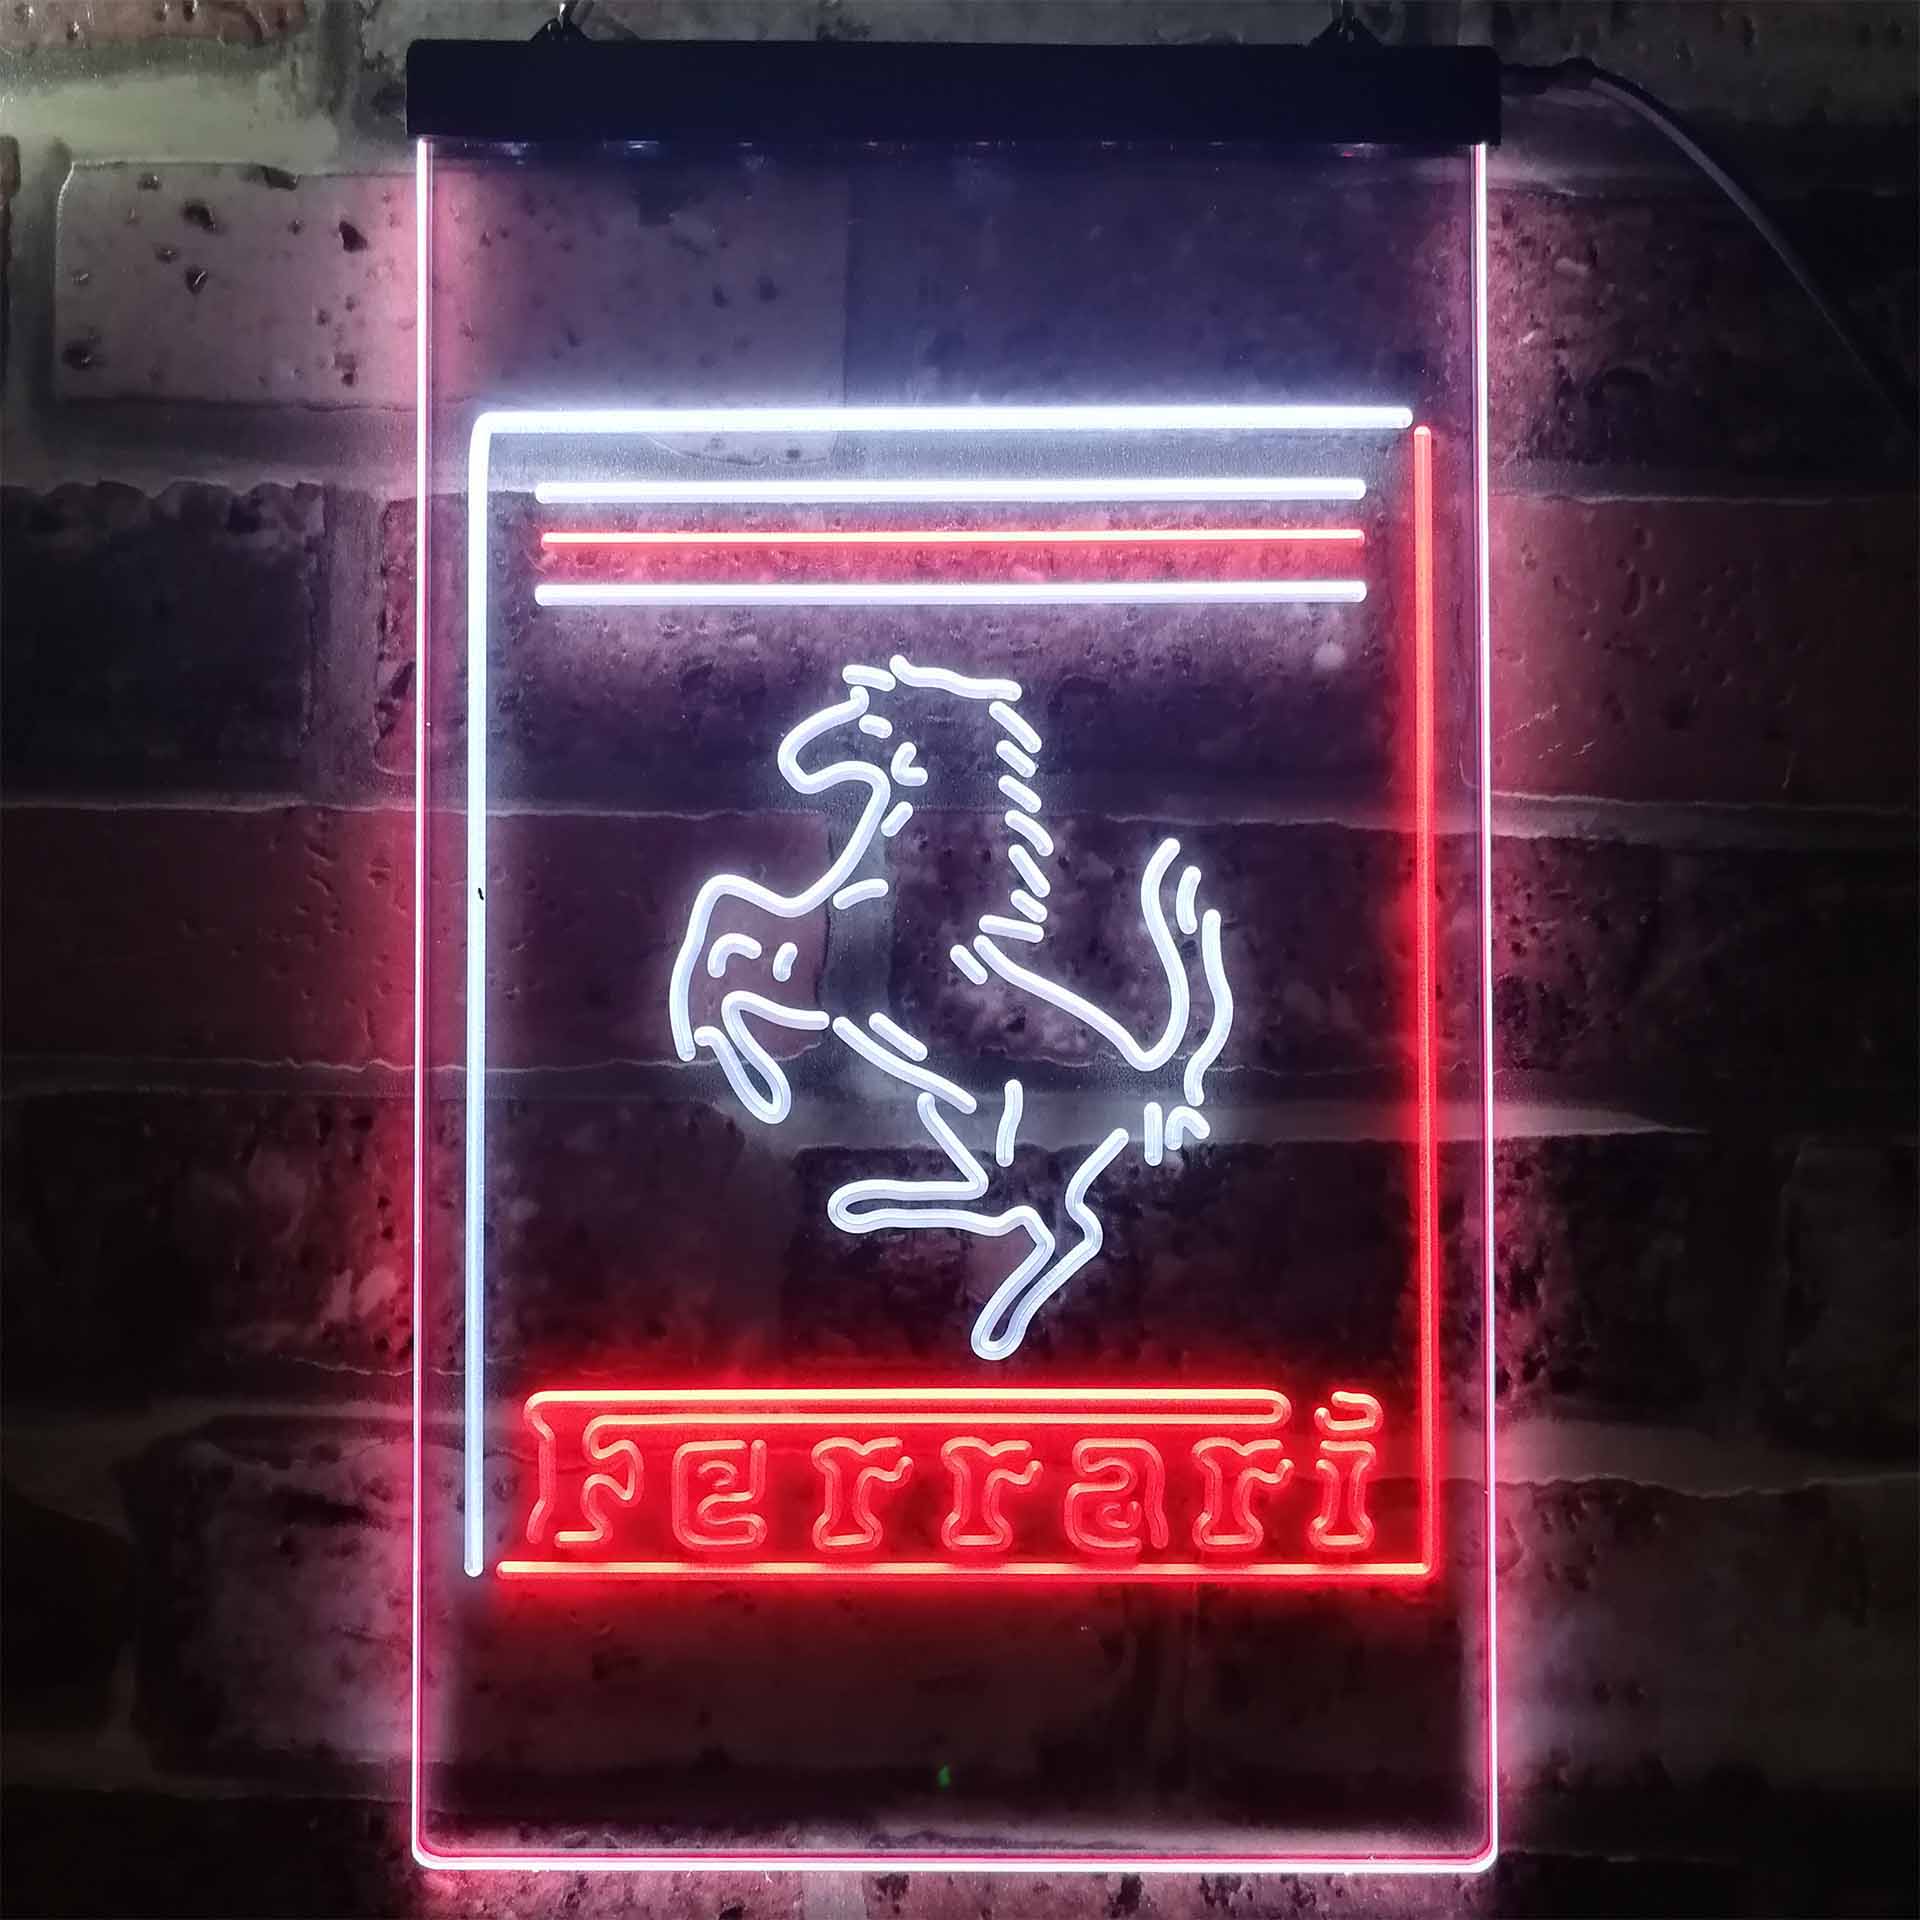 Ferraris Sports Car LED Neon Sign